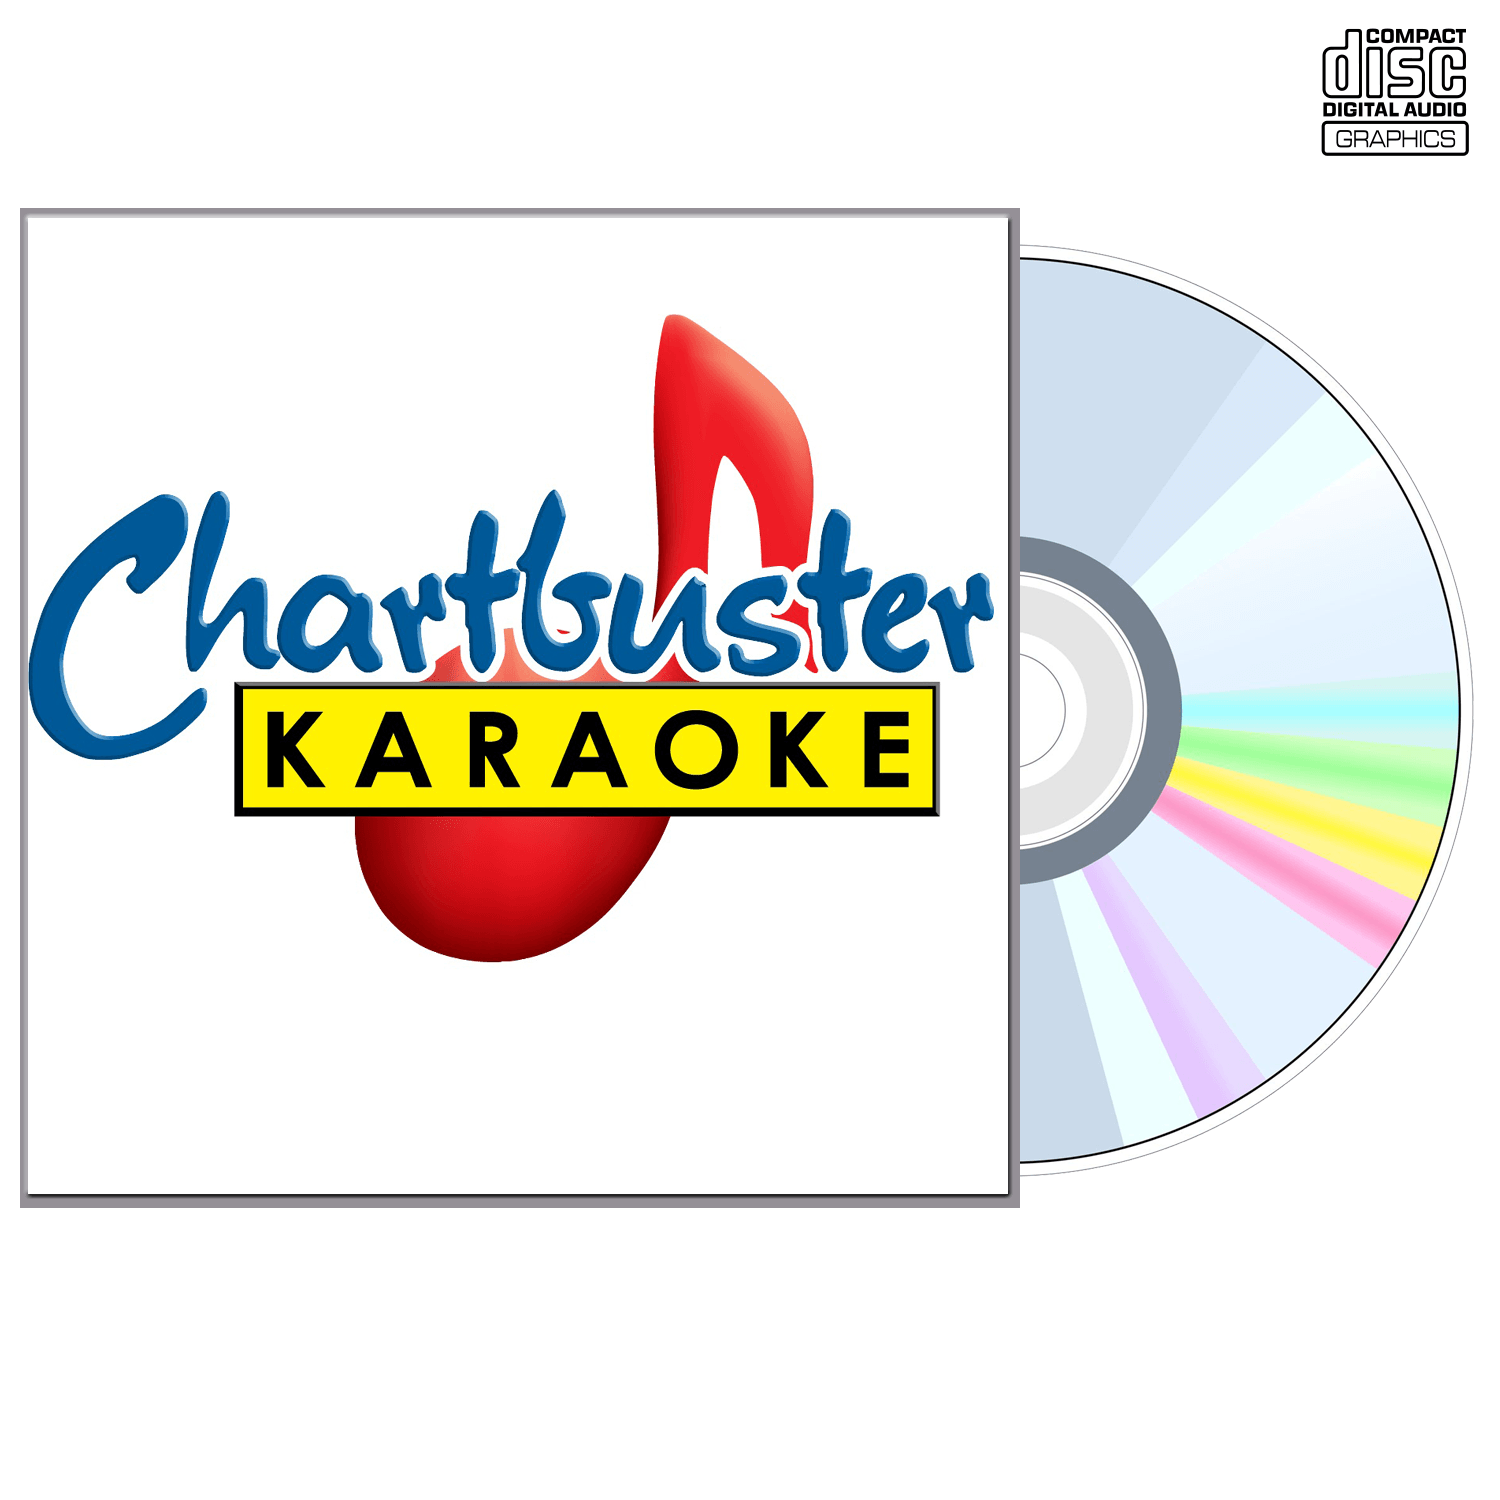 Ultimate 90's Collection Vol 12 - CD+G - Chartbuster Karaoke - Karaoke Home Entertainment